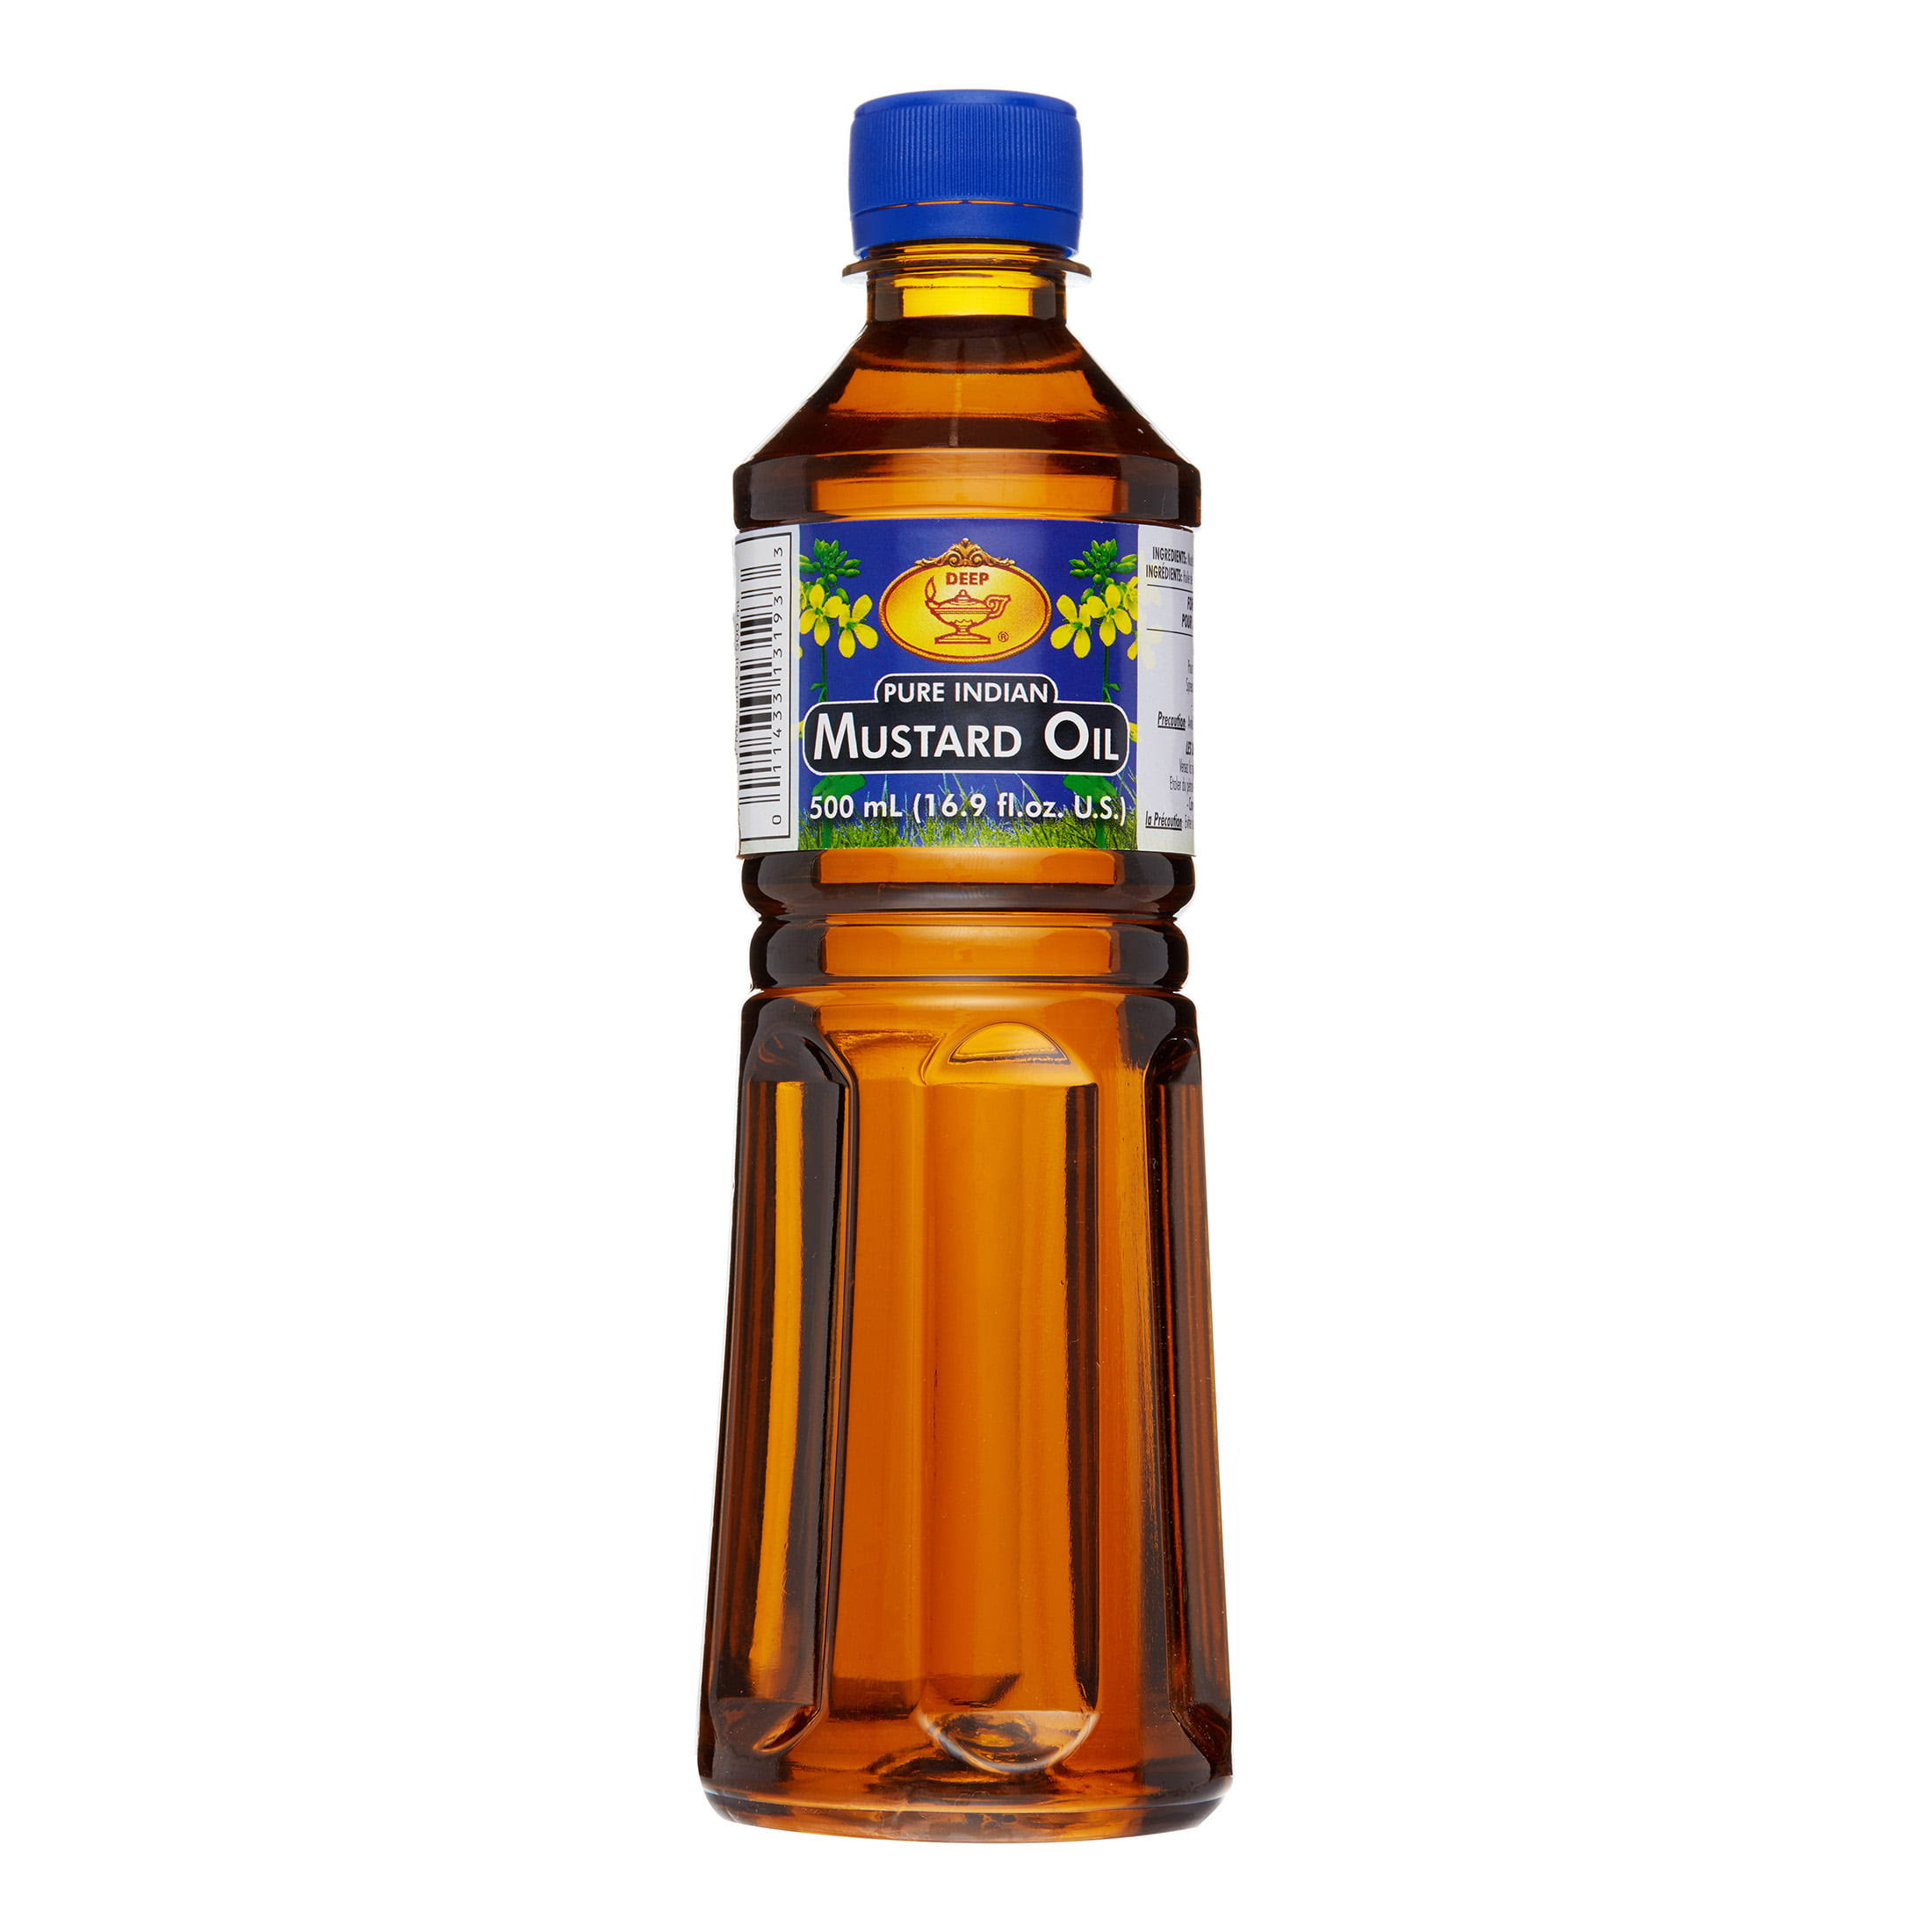 Deep Pure Indian Mustard Oil - 16.9oz